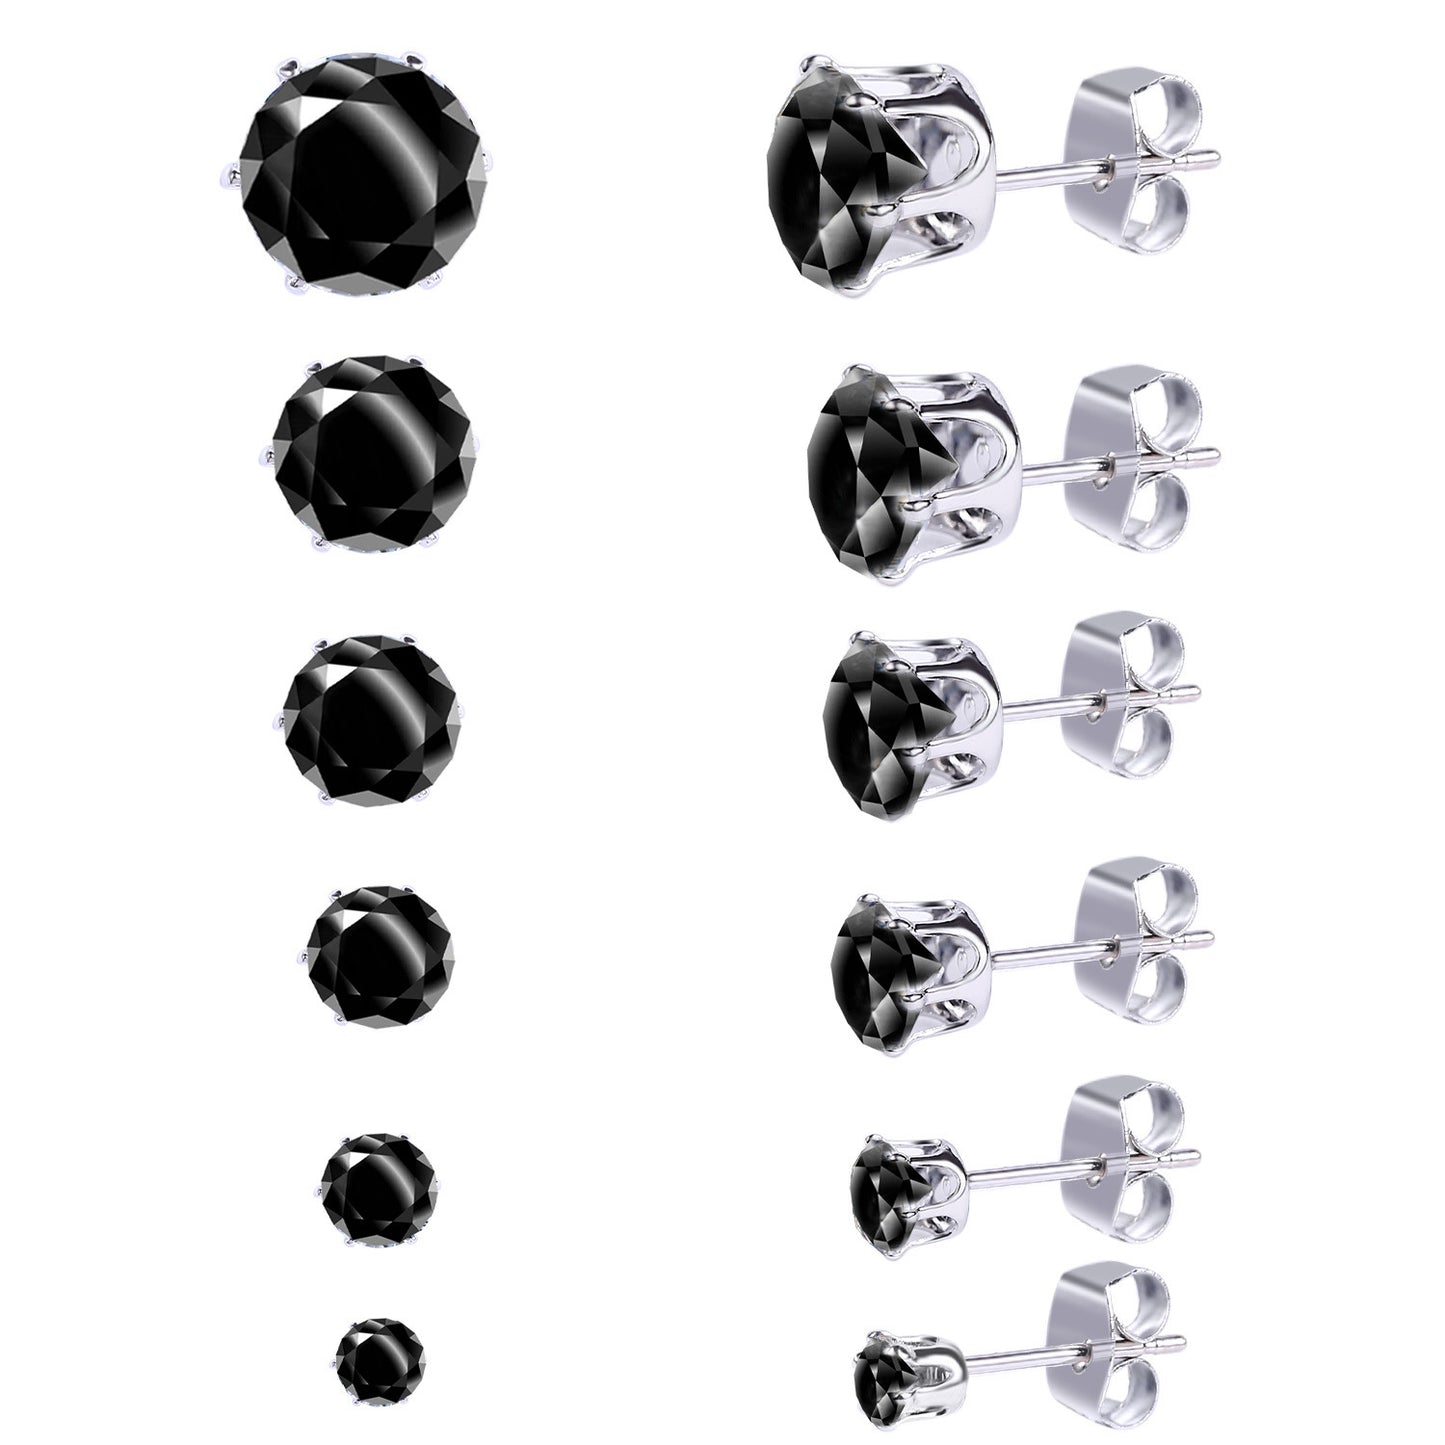 Zircon Earrings that have some Dazzle - Niki Ice Jewelry 